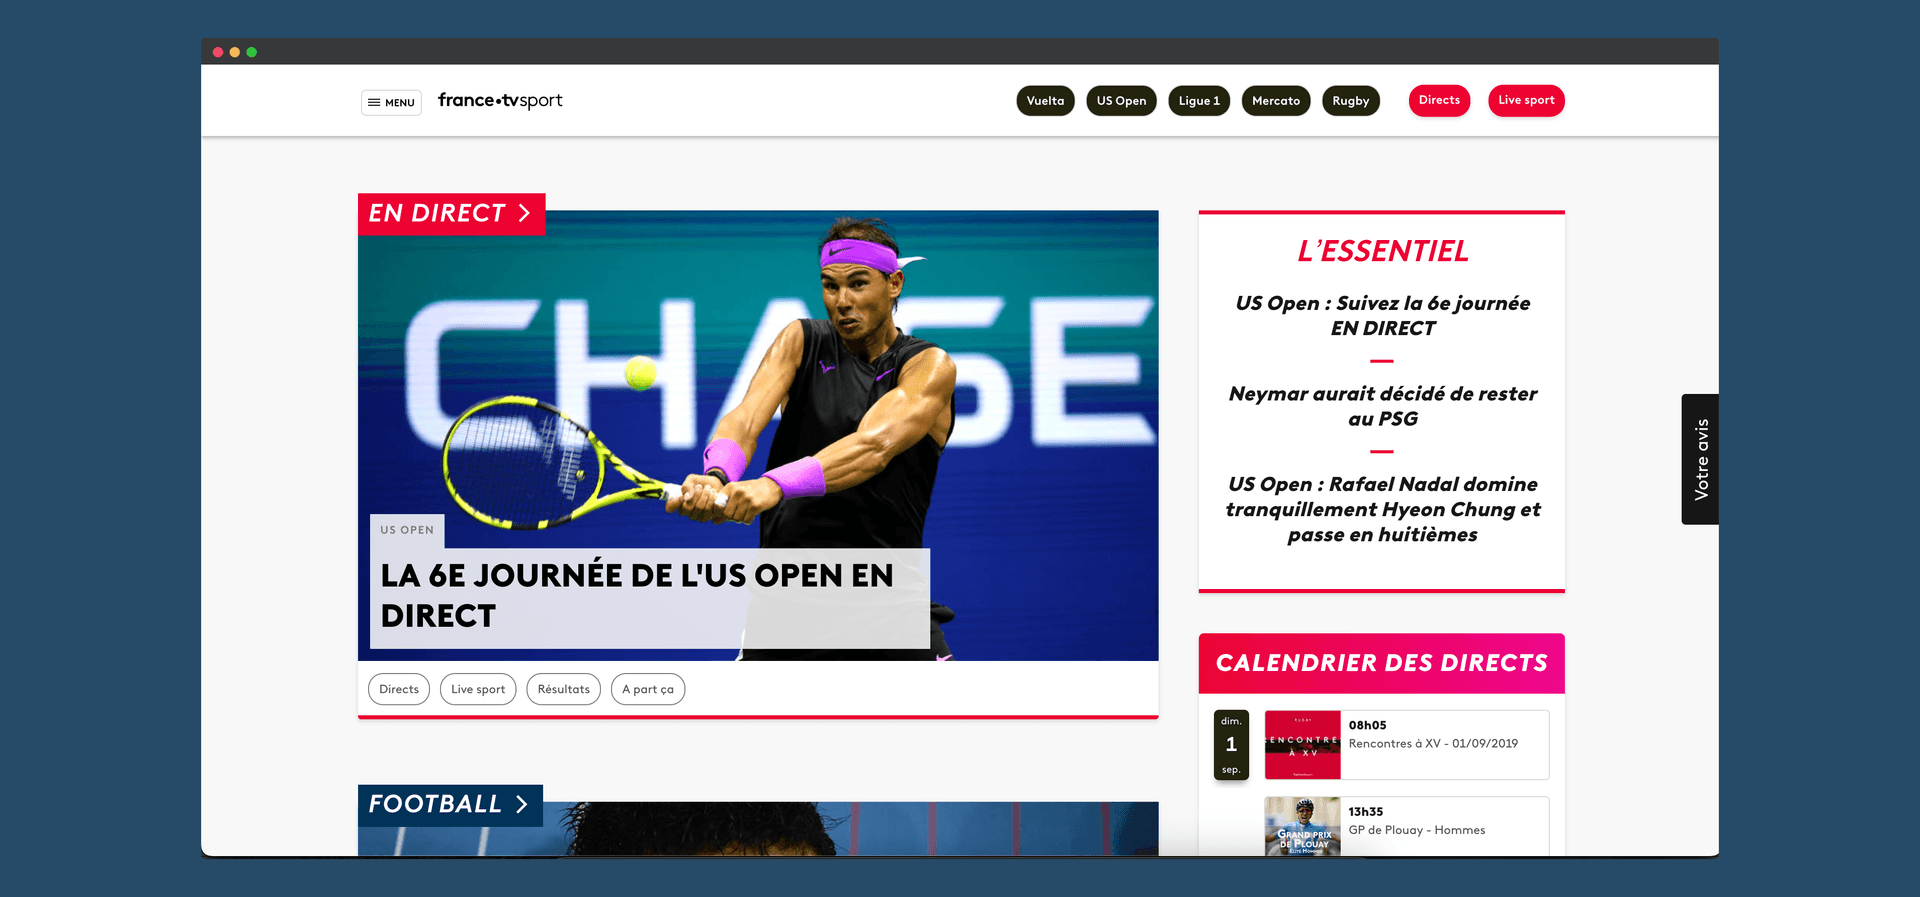 Homepage of France tv sport website